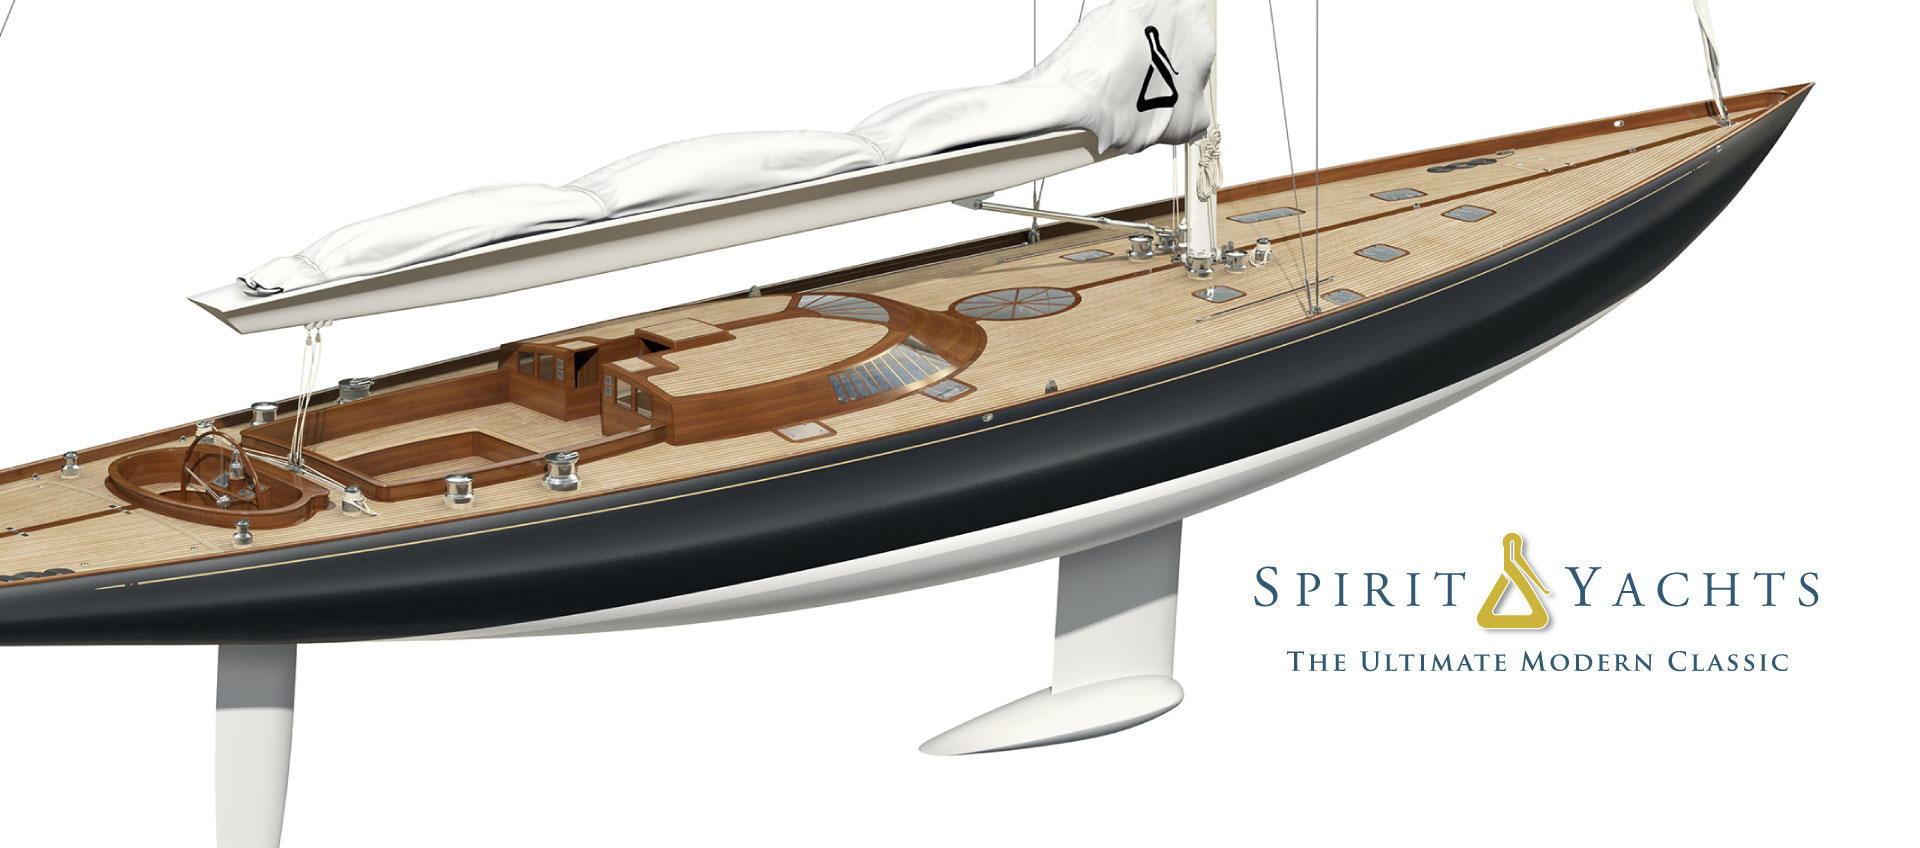 Spirit Yachts Marketing P100